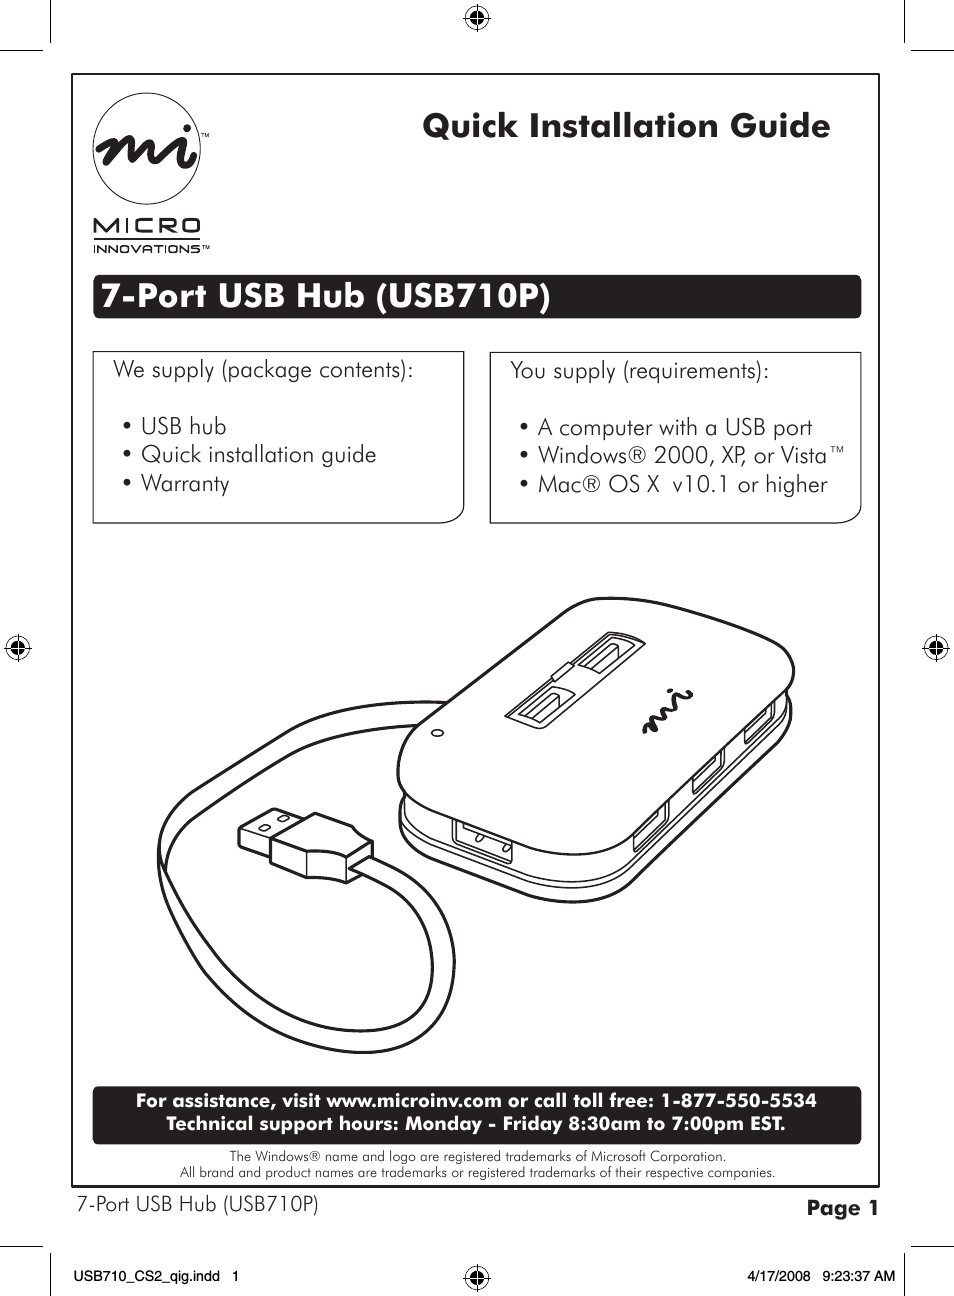 7-Port USB Hub USB710P